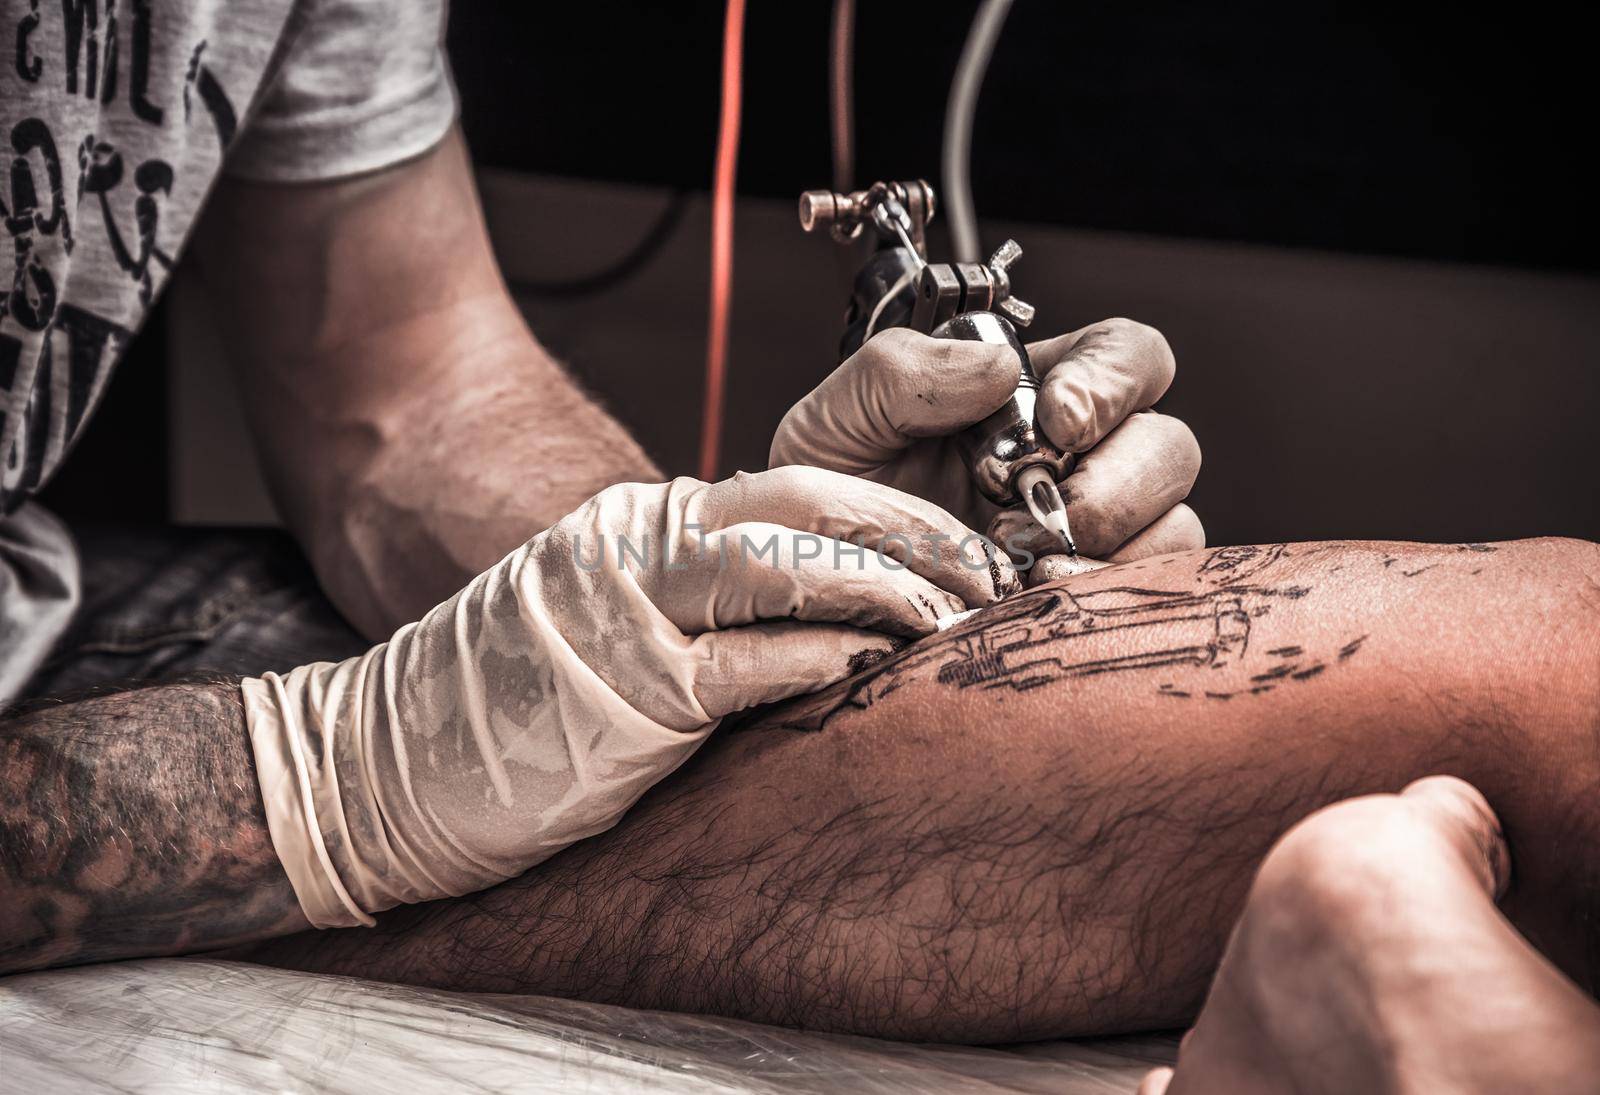 Tattoo artist at the process of the tatoo making